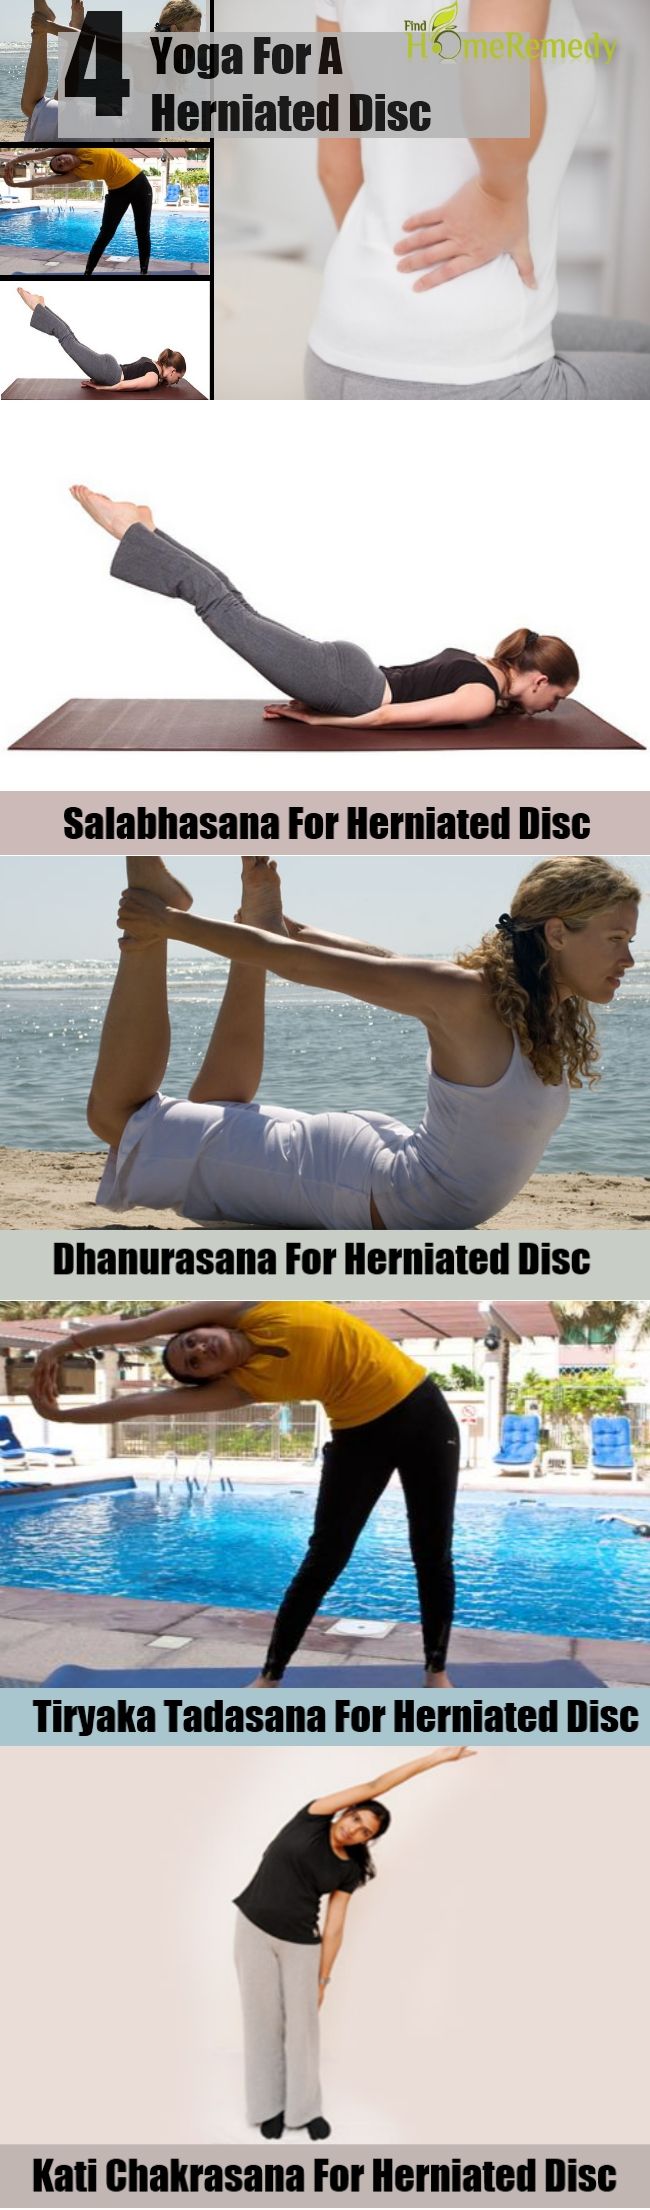 4 Yoga For A hernie discale